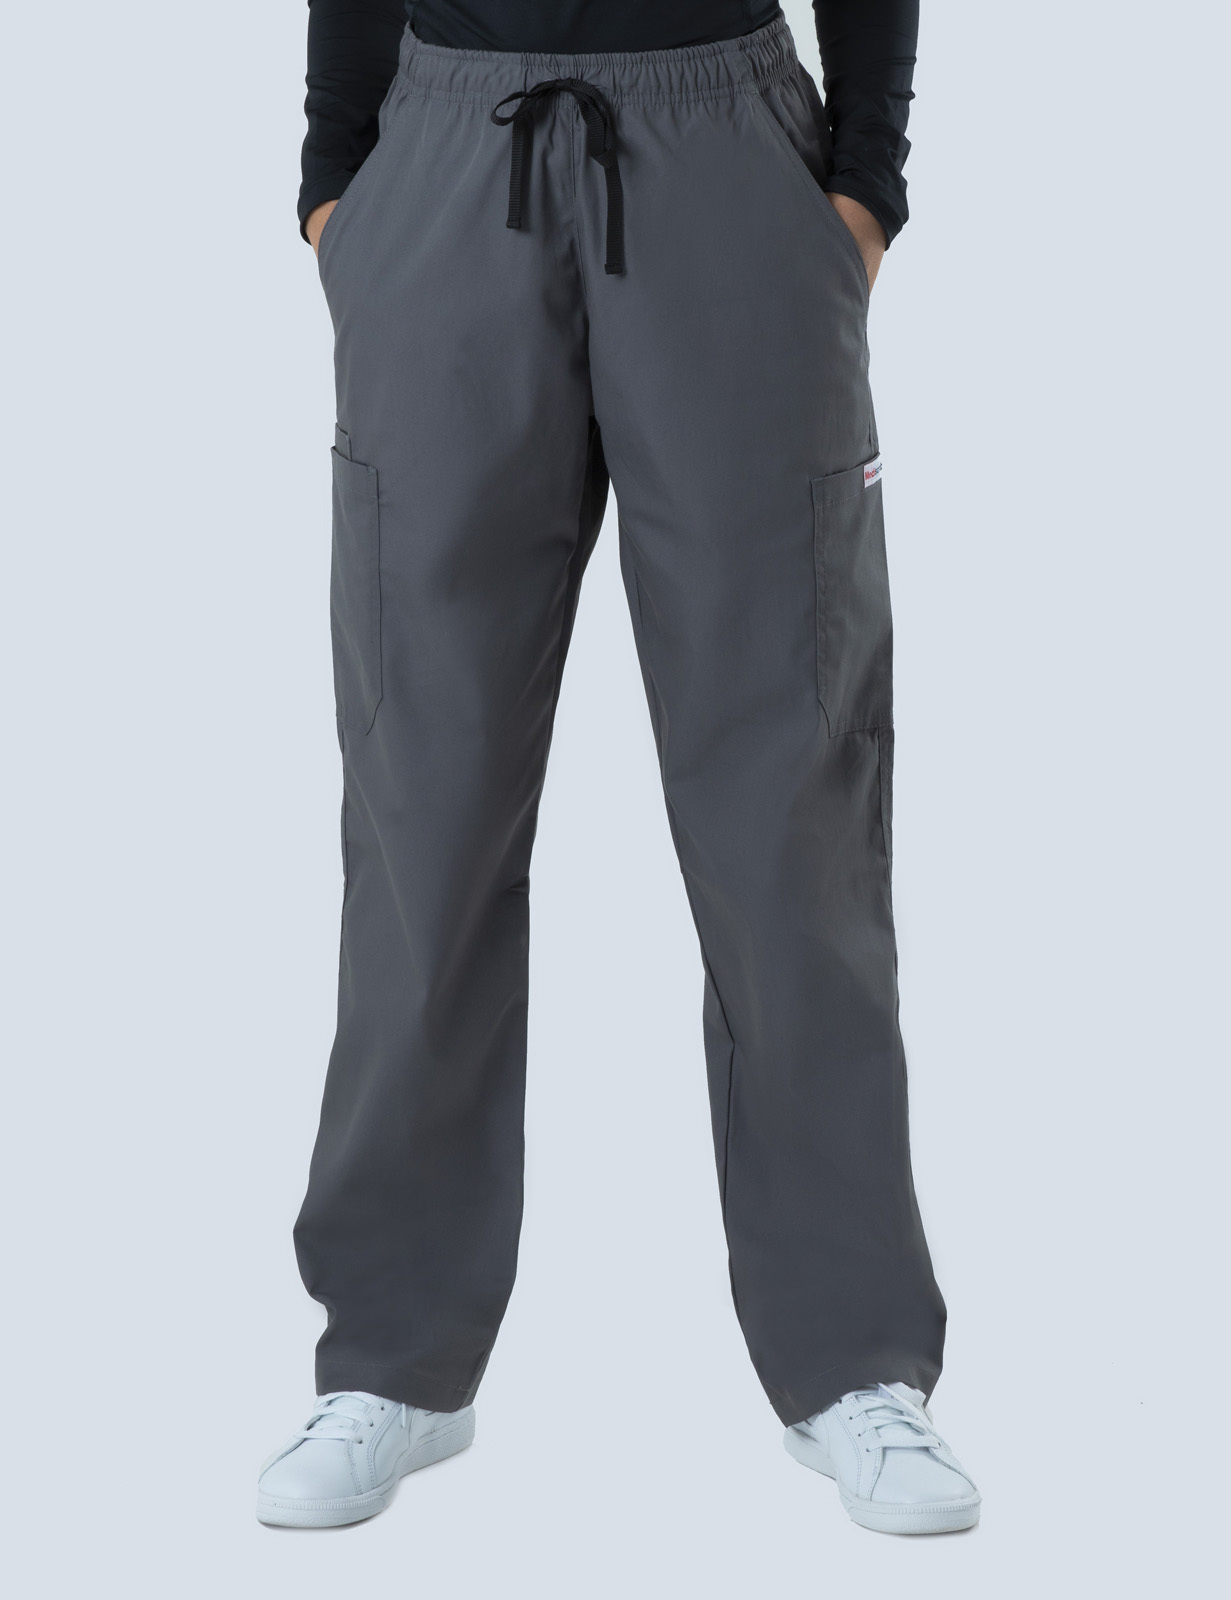 Women's Cargo Performance Pants - Steel Grey - X Large